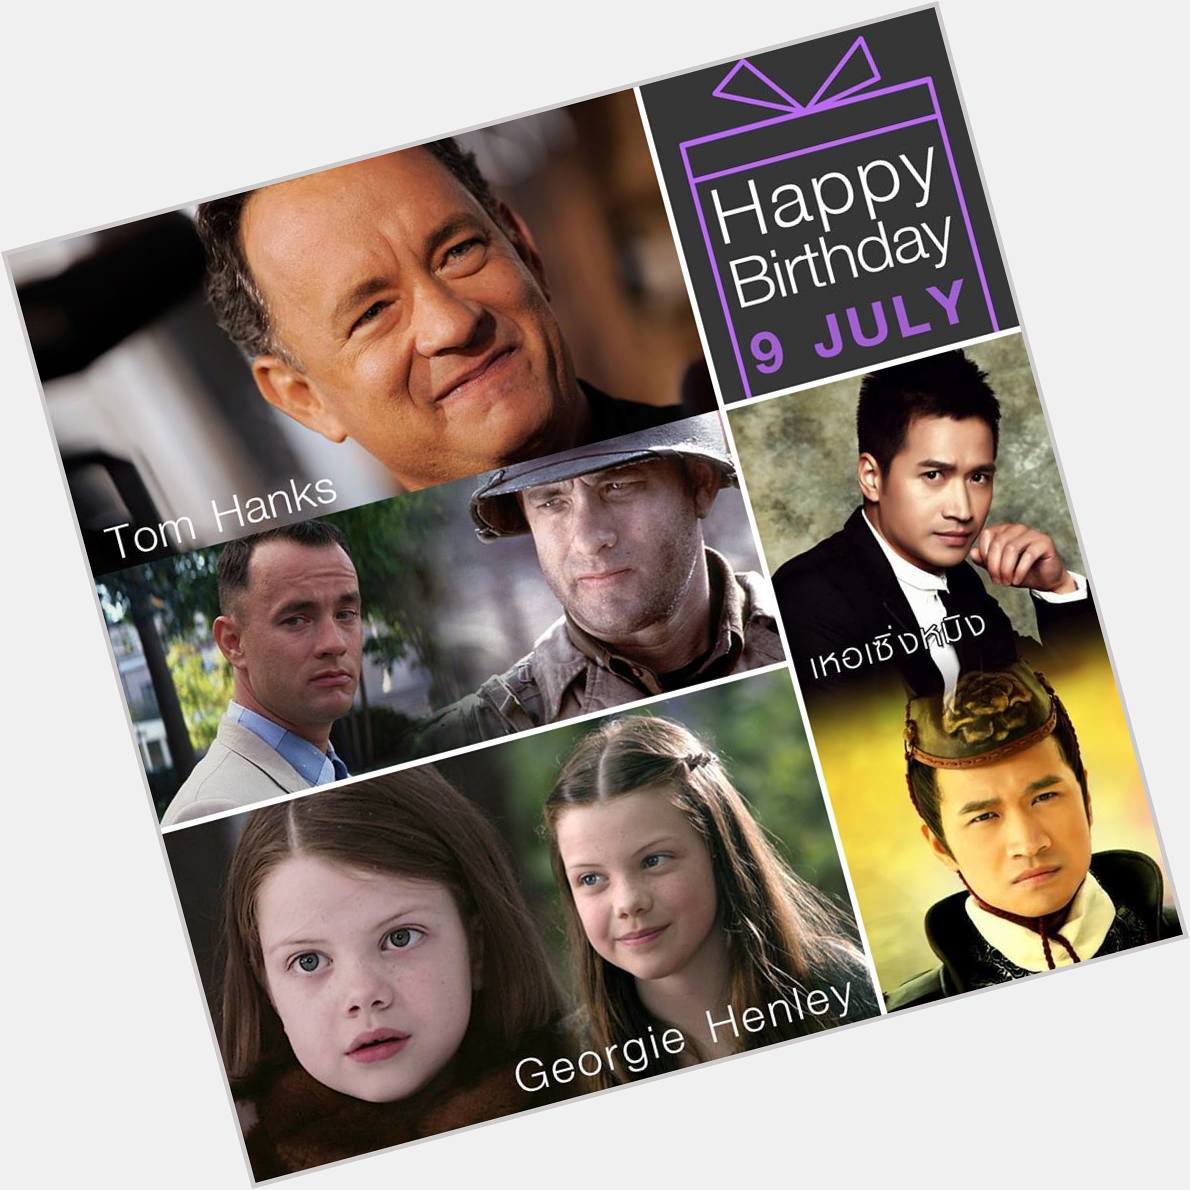 9 July Happy Birthday
Tom Hanks / Georgie Henley /           